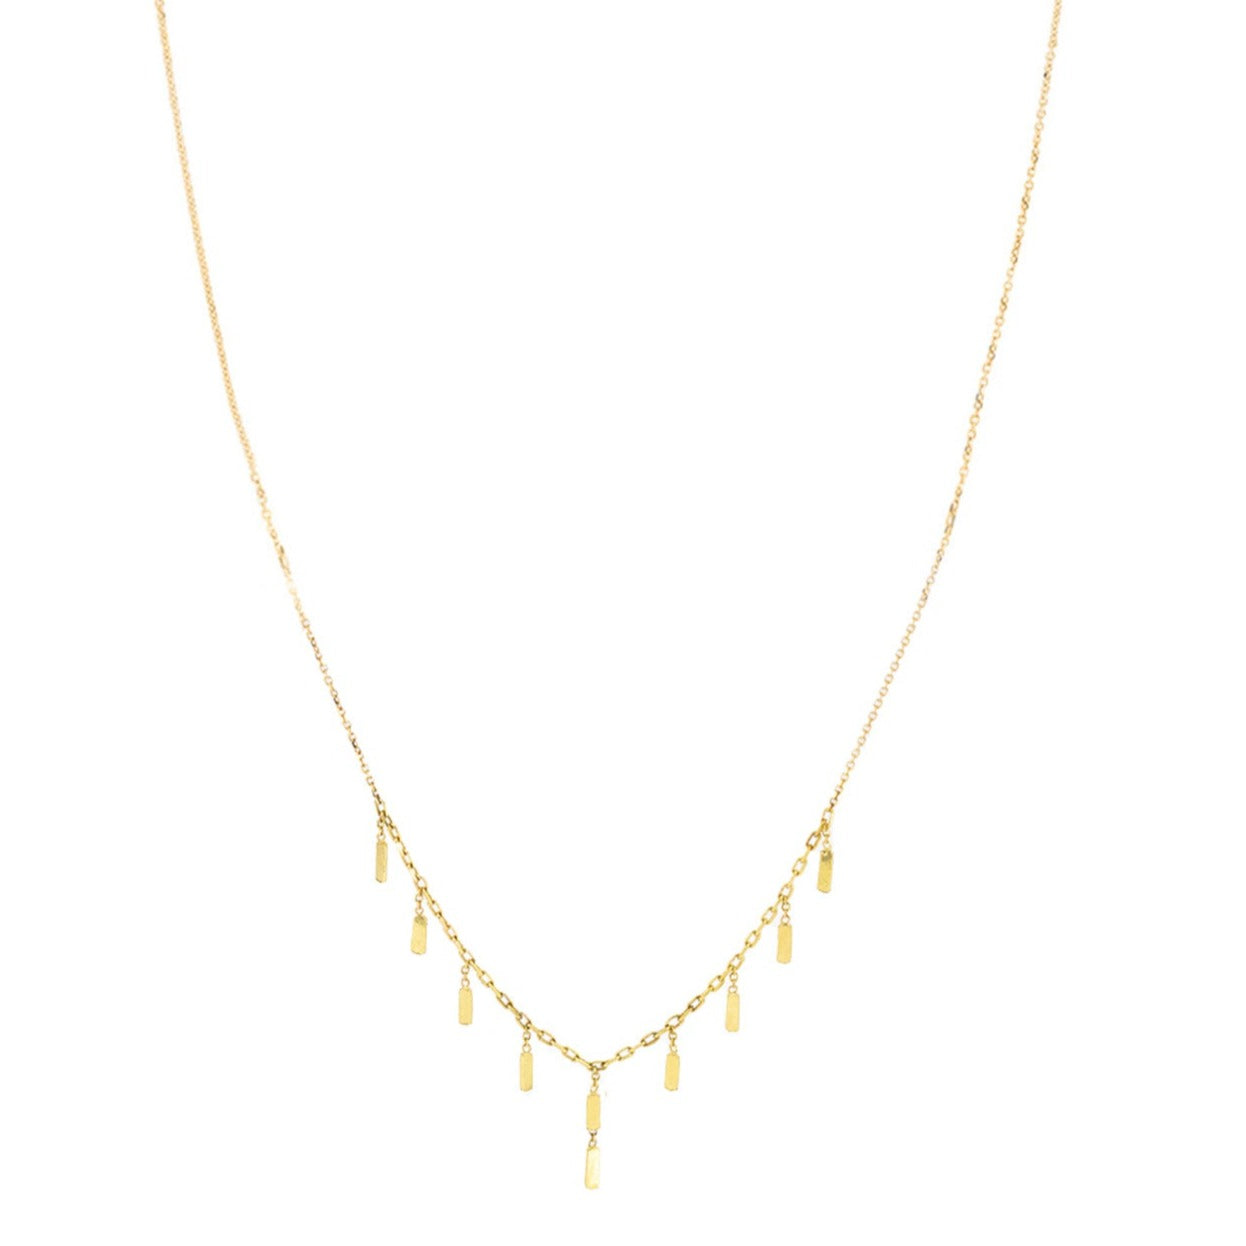 Enchanting Gold Bar Charm Necklace close up